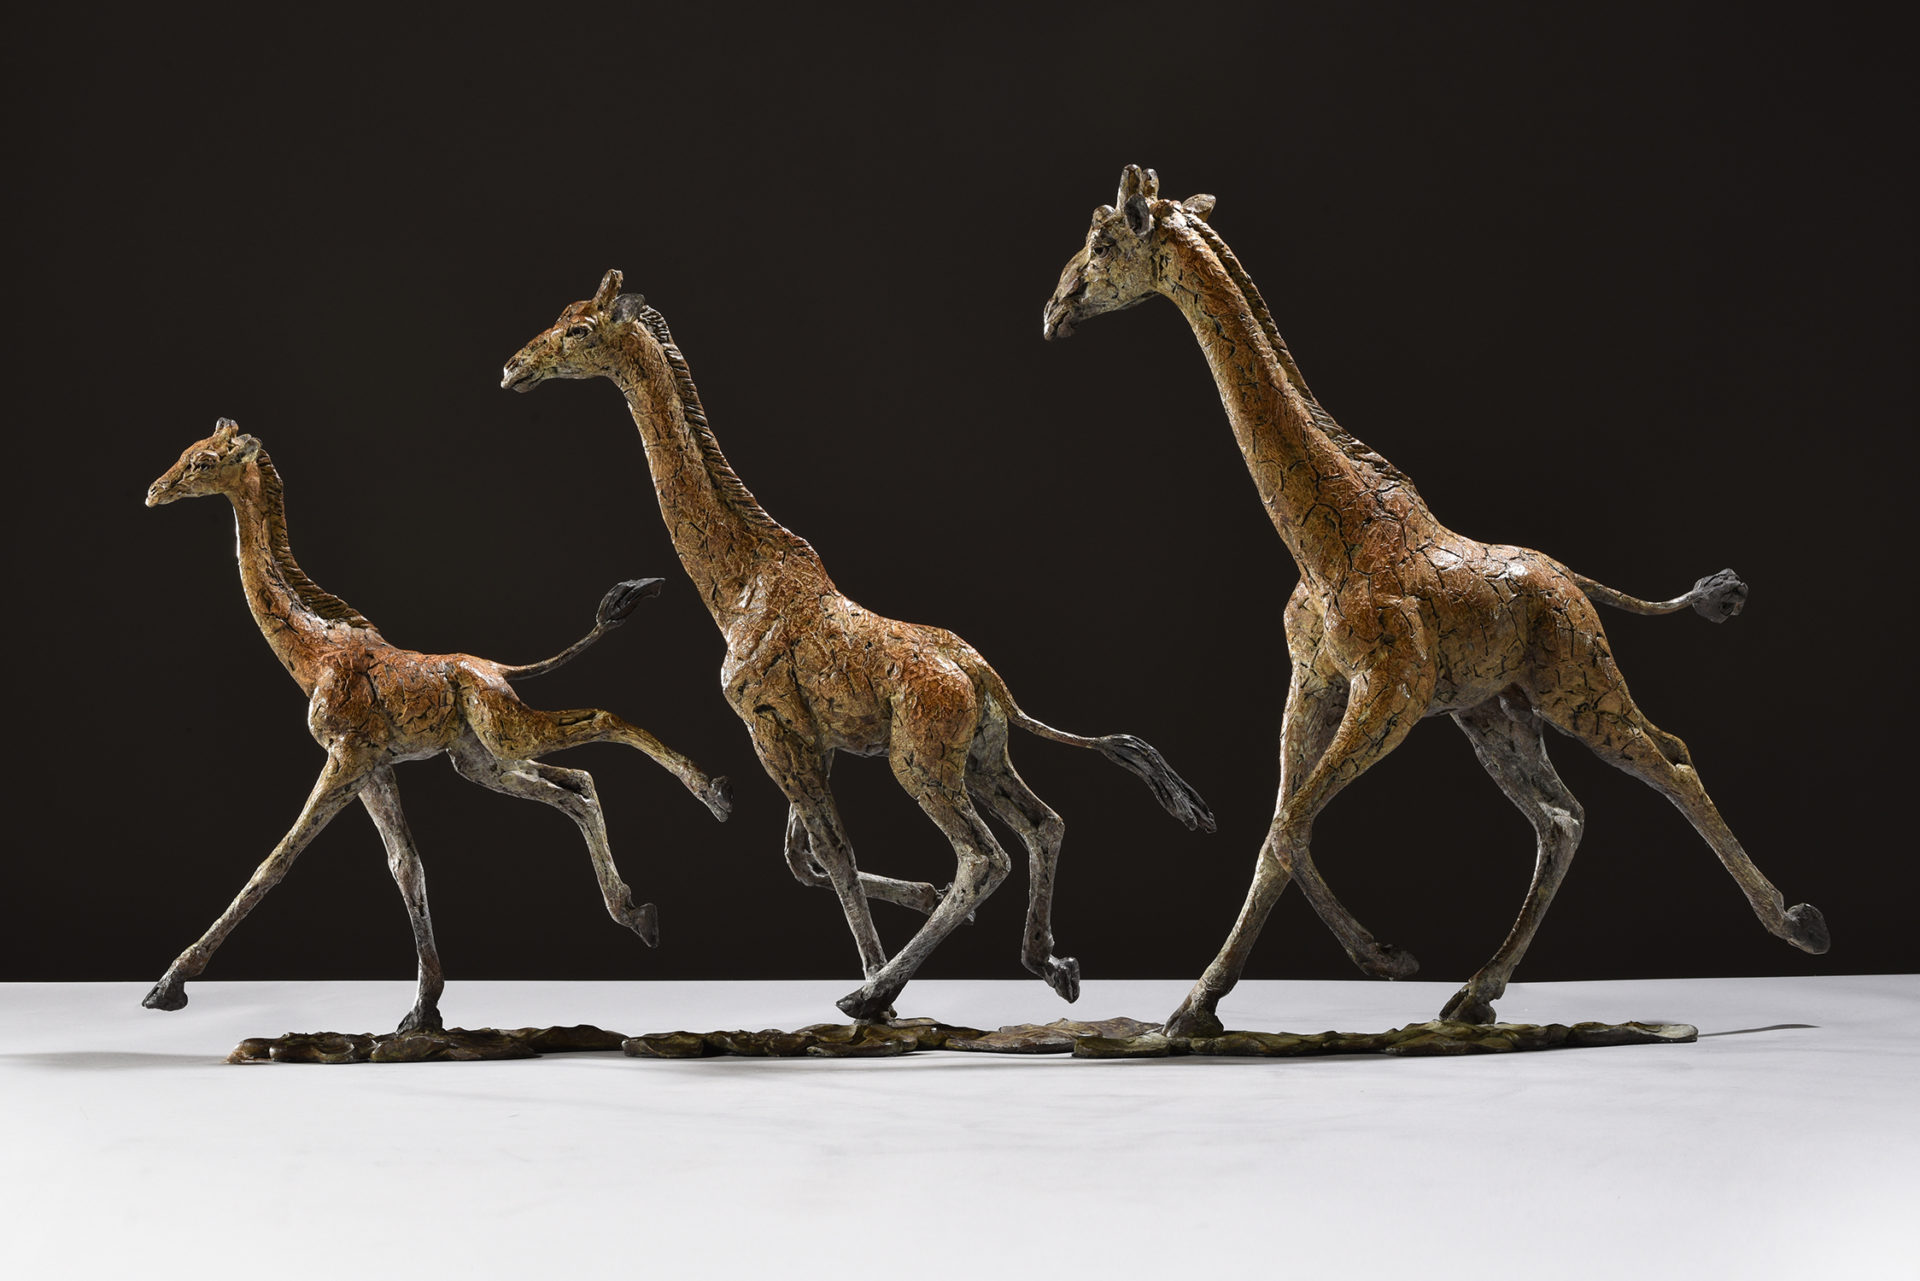 three of Hamish's giraffe sculpture